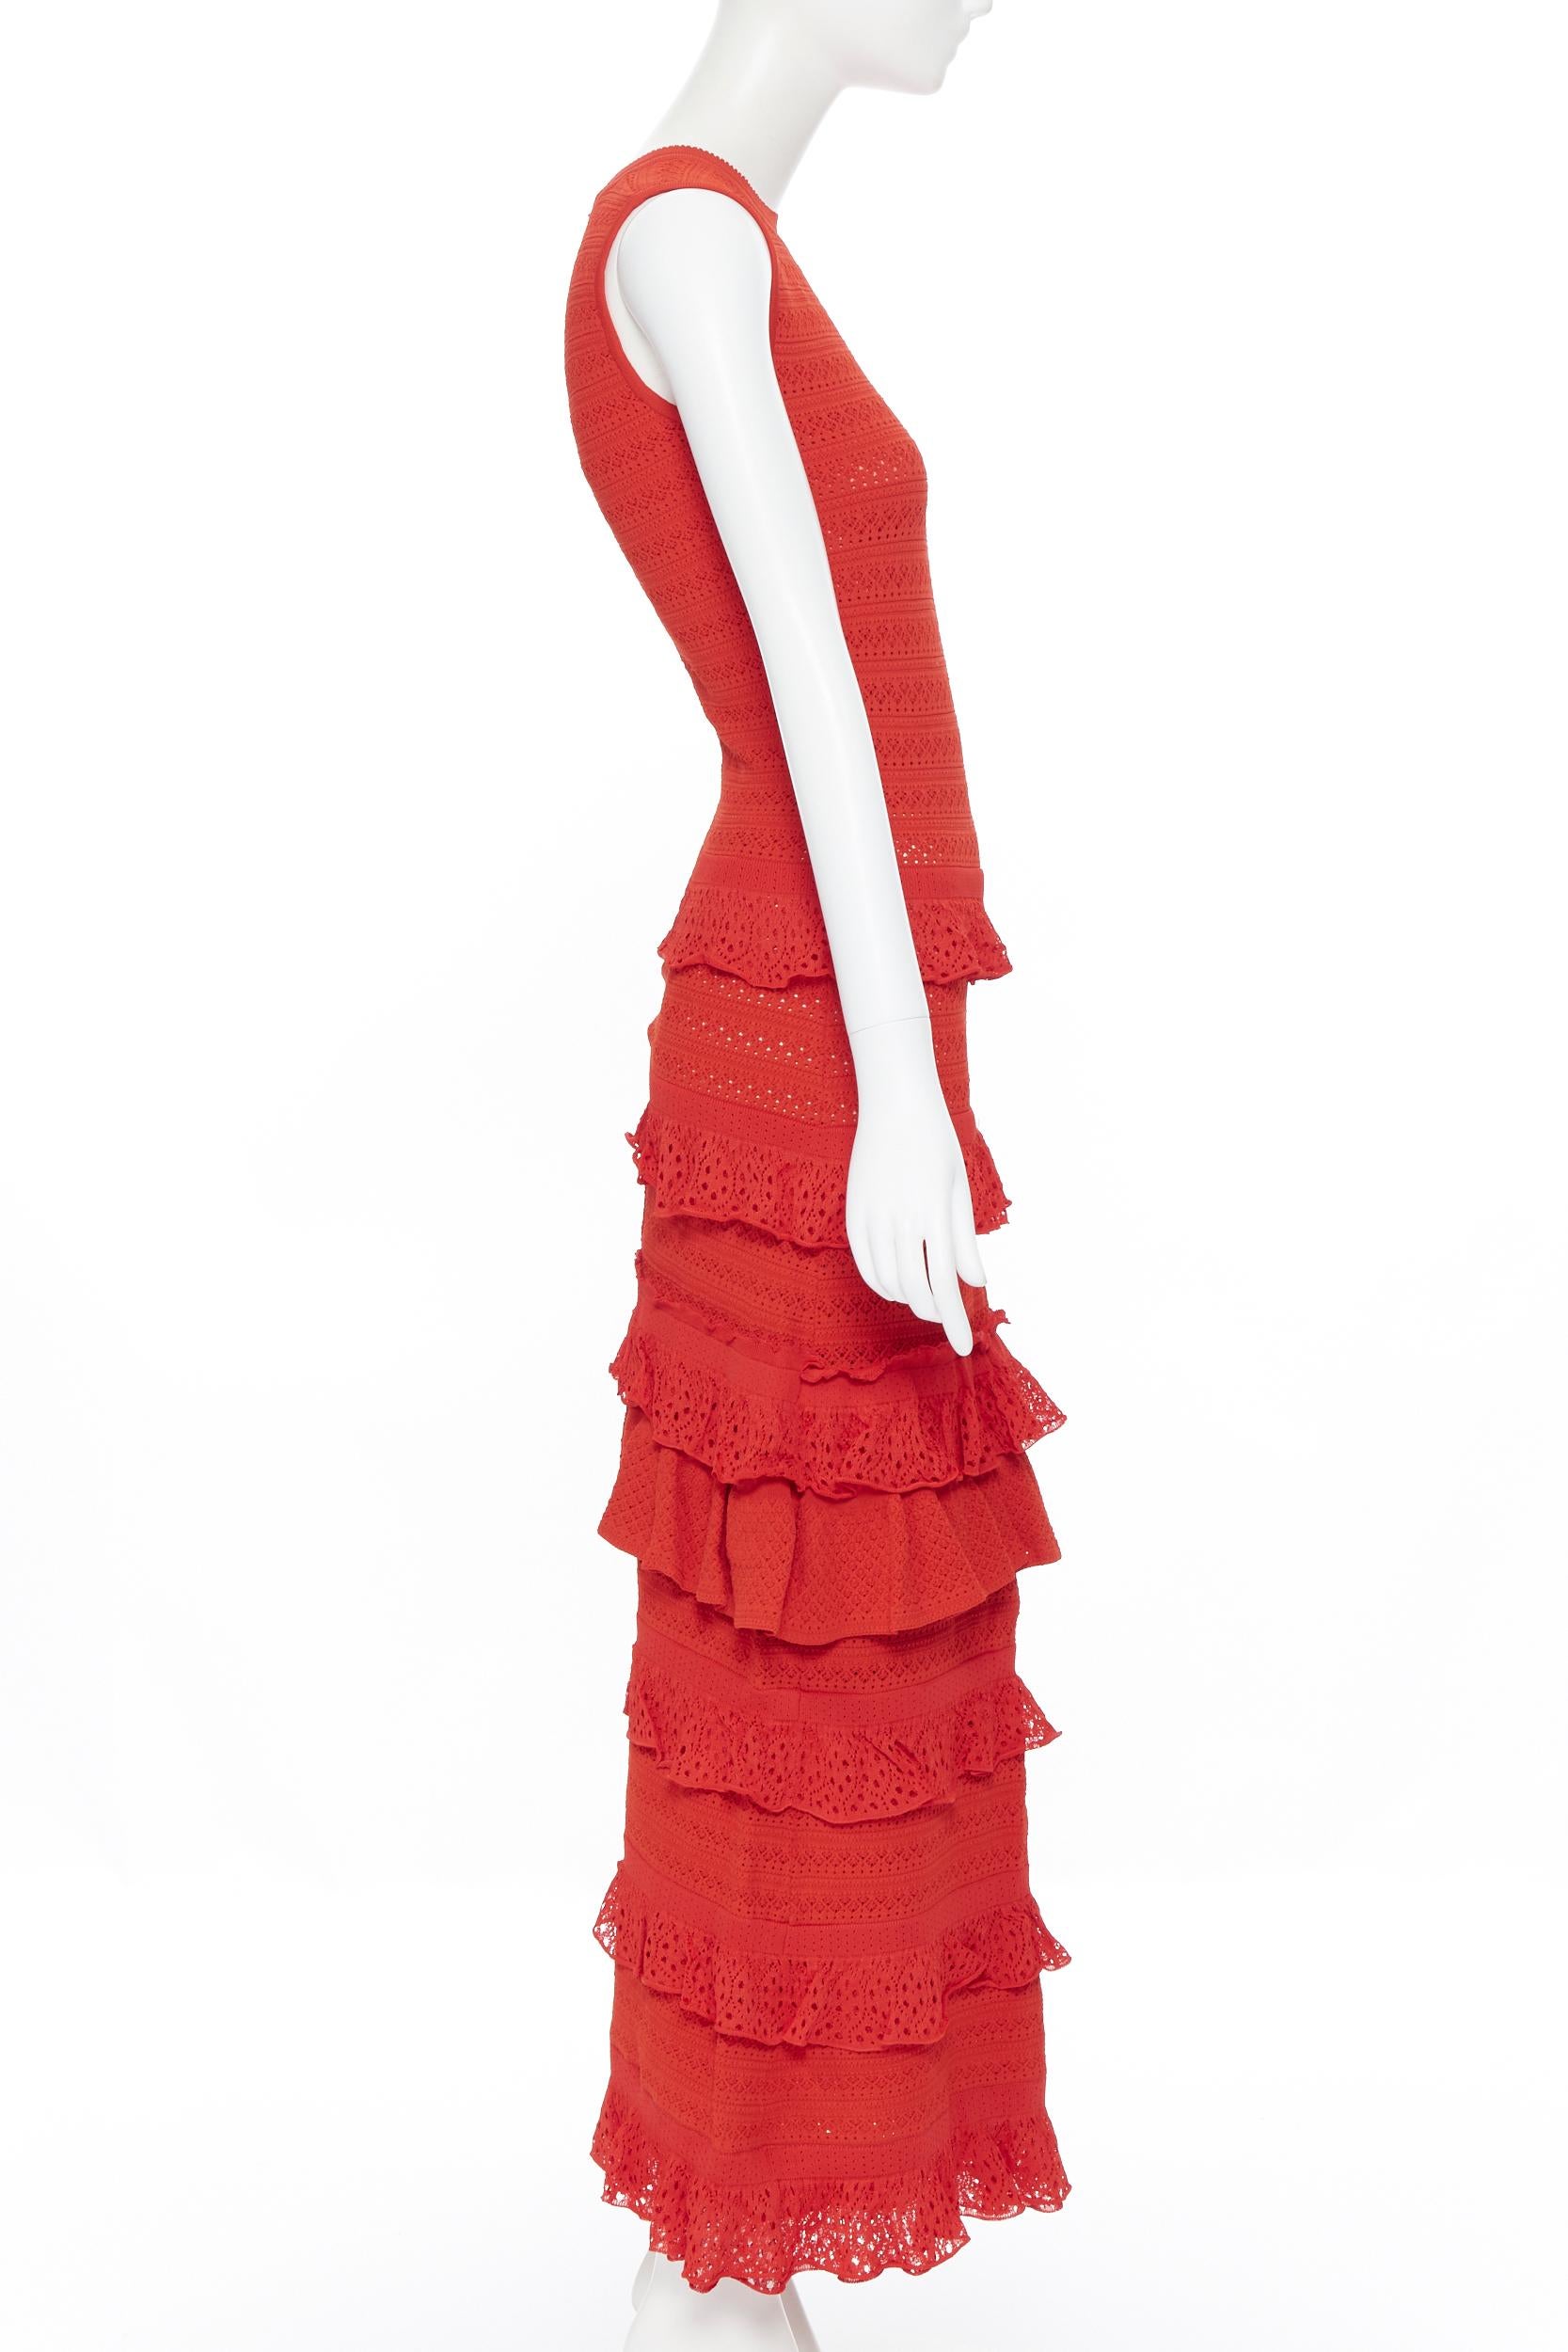 Red OSCAR DE LA RENTA SS17 red knitted tiered ruffle trimevening gown dress XS